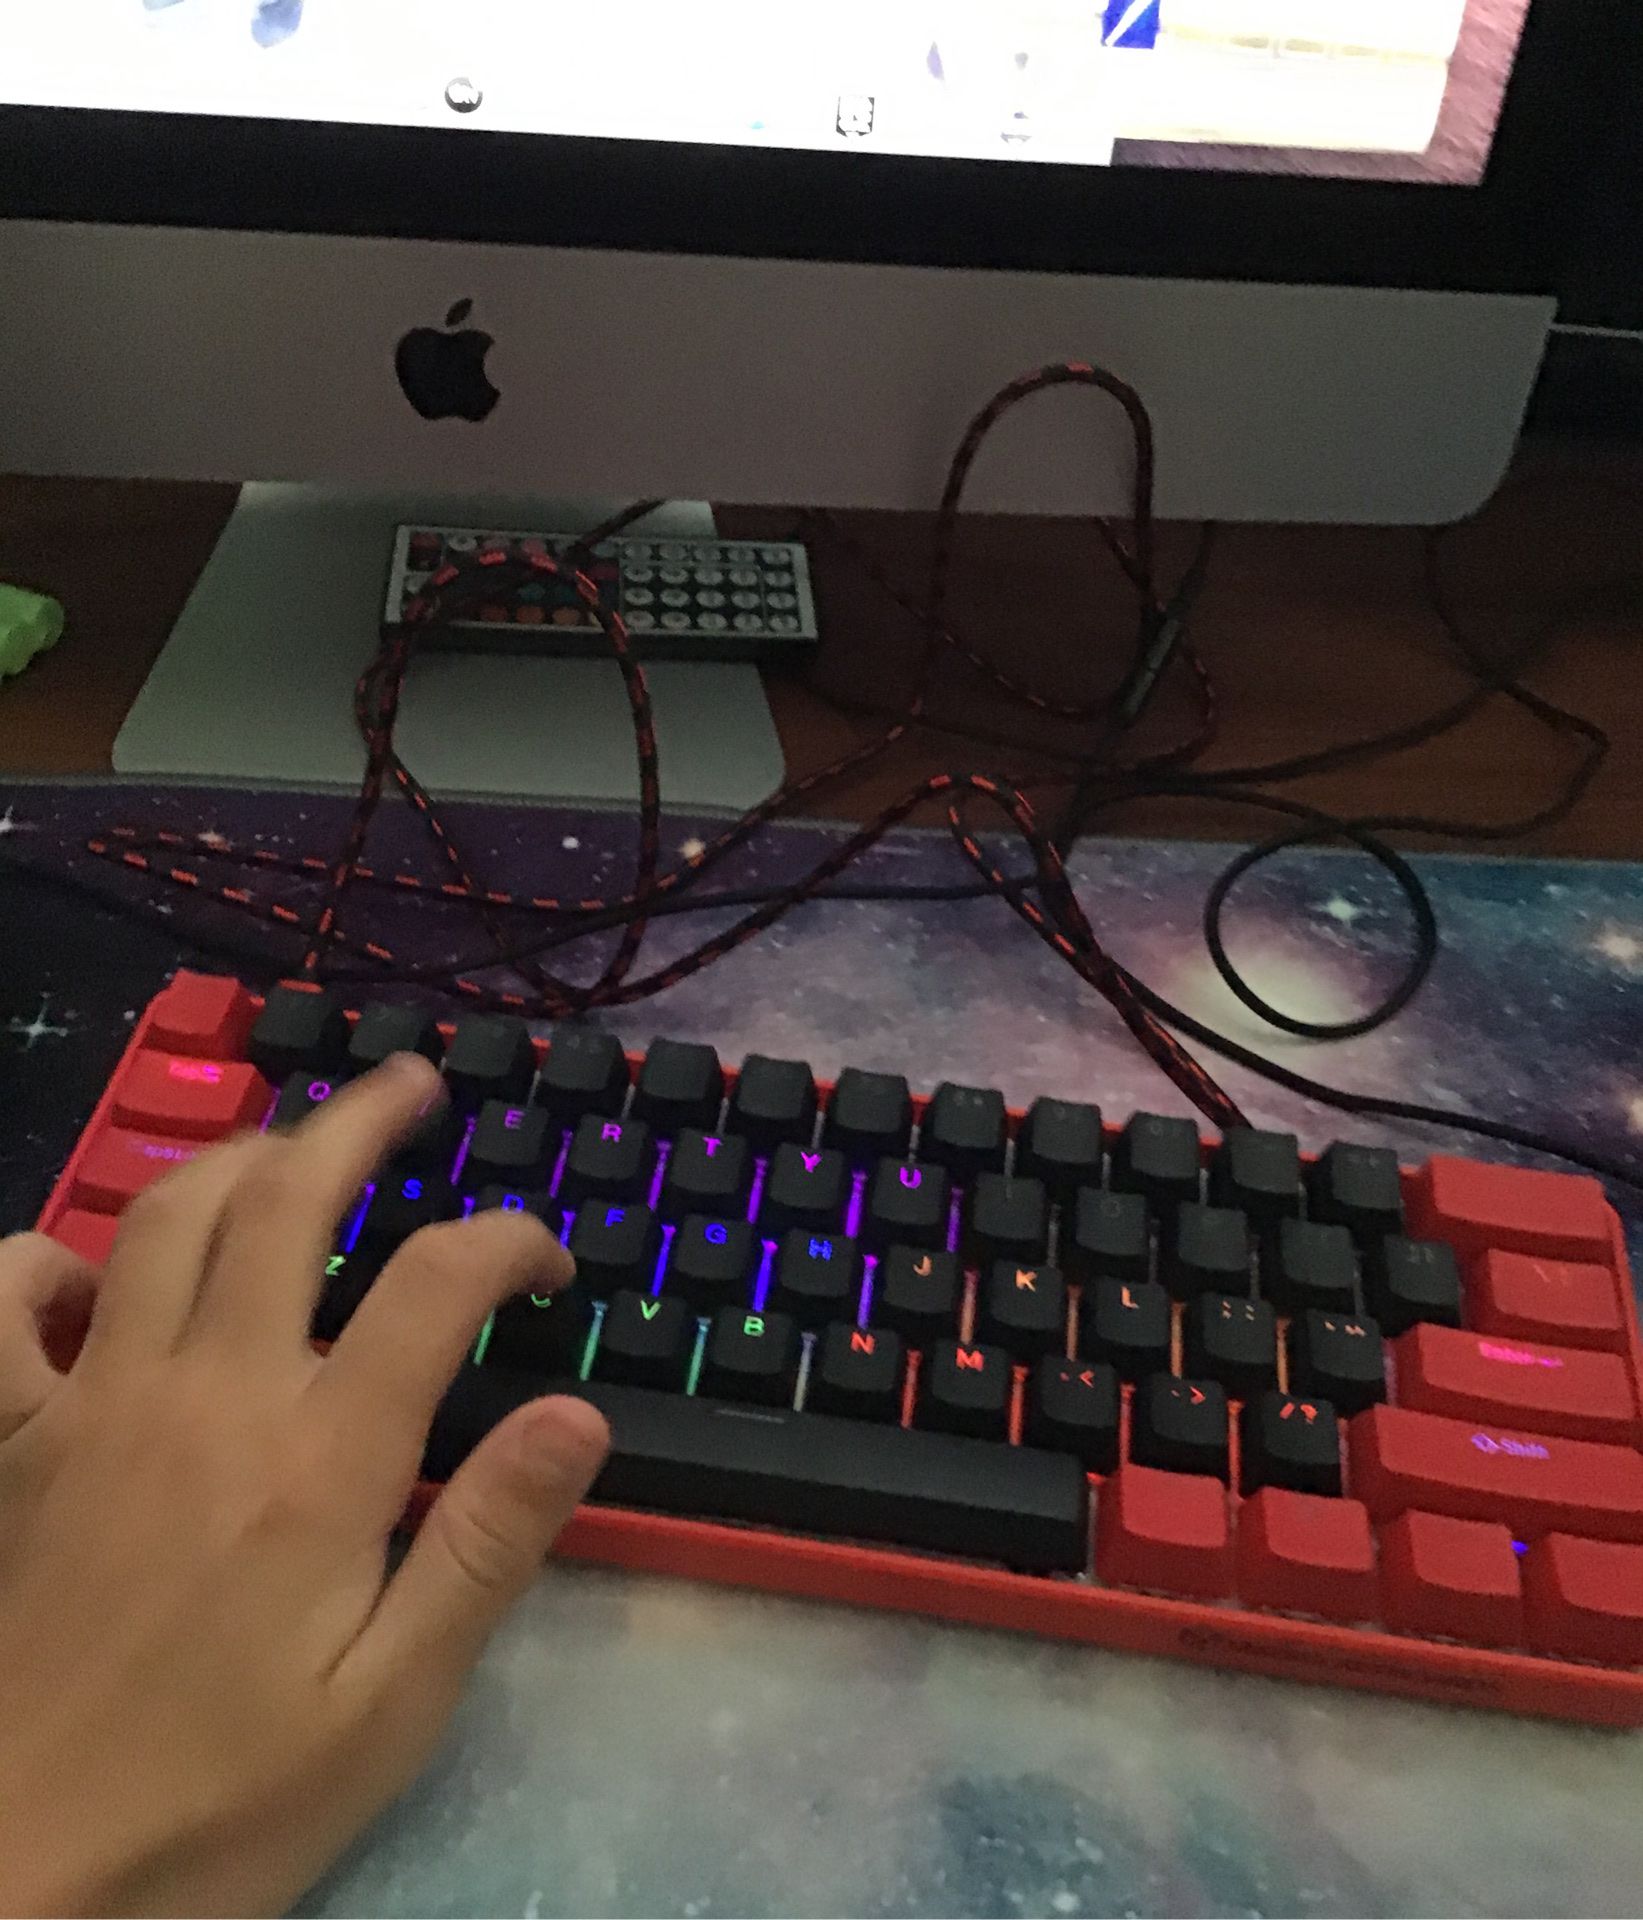 Clix keyboard